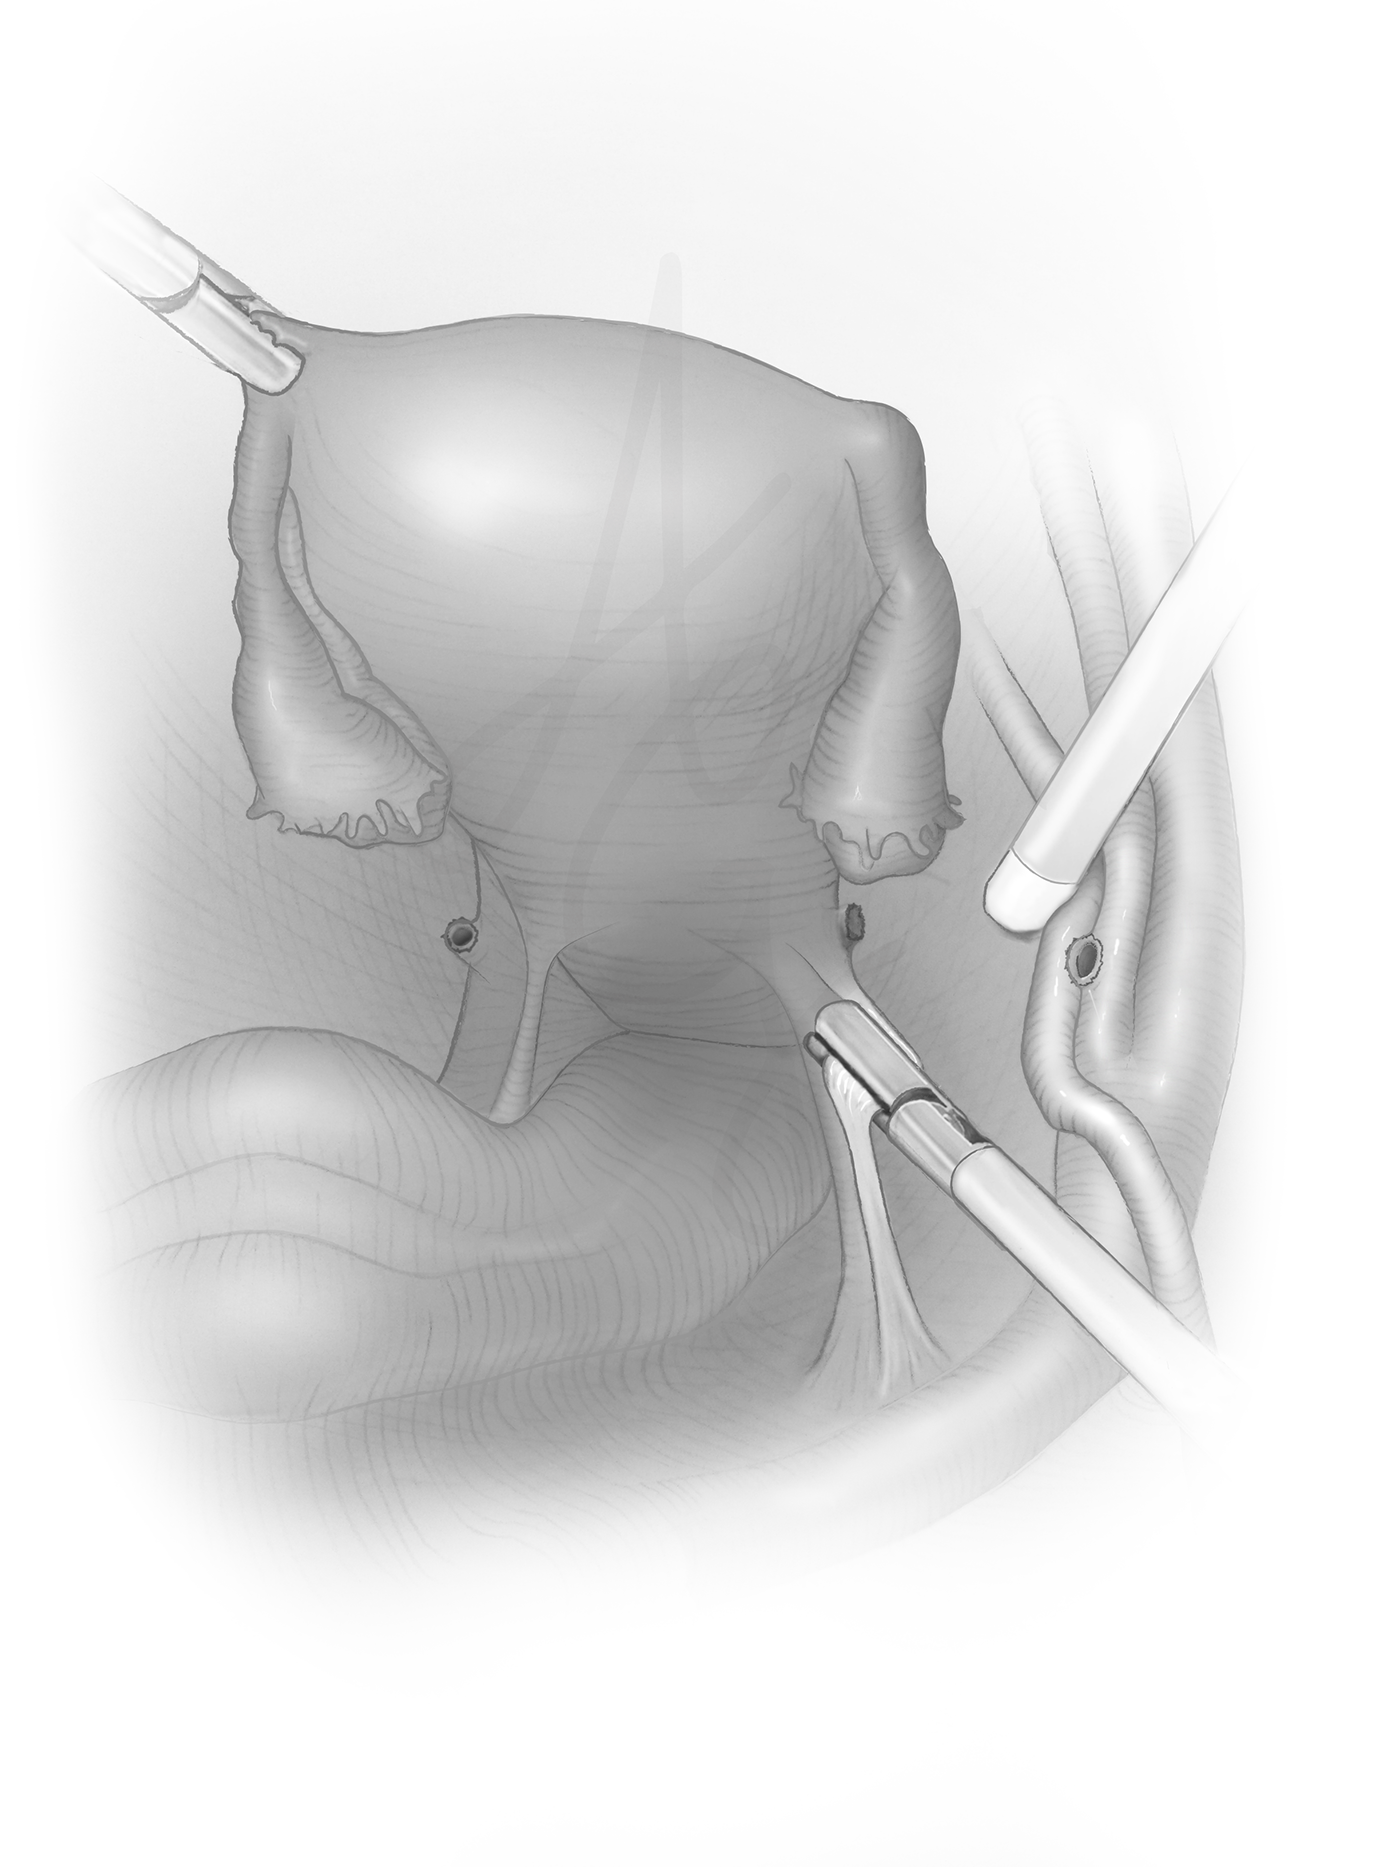 medical illustration Surgical Illustration hysterectomy uterus medical textbook